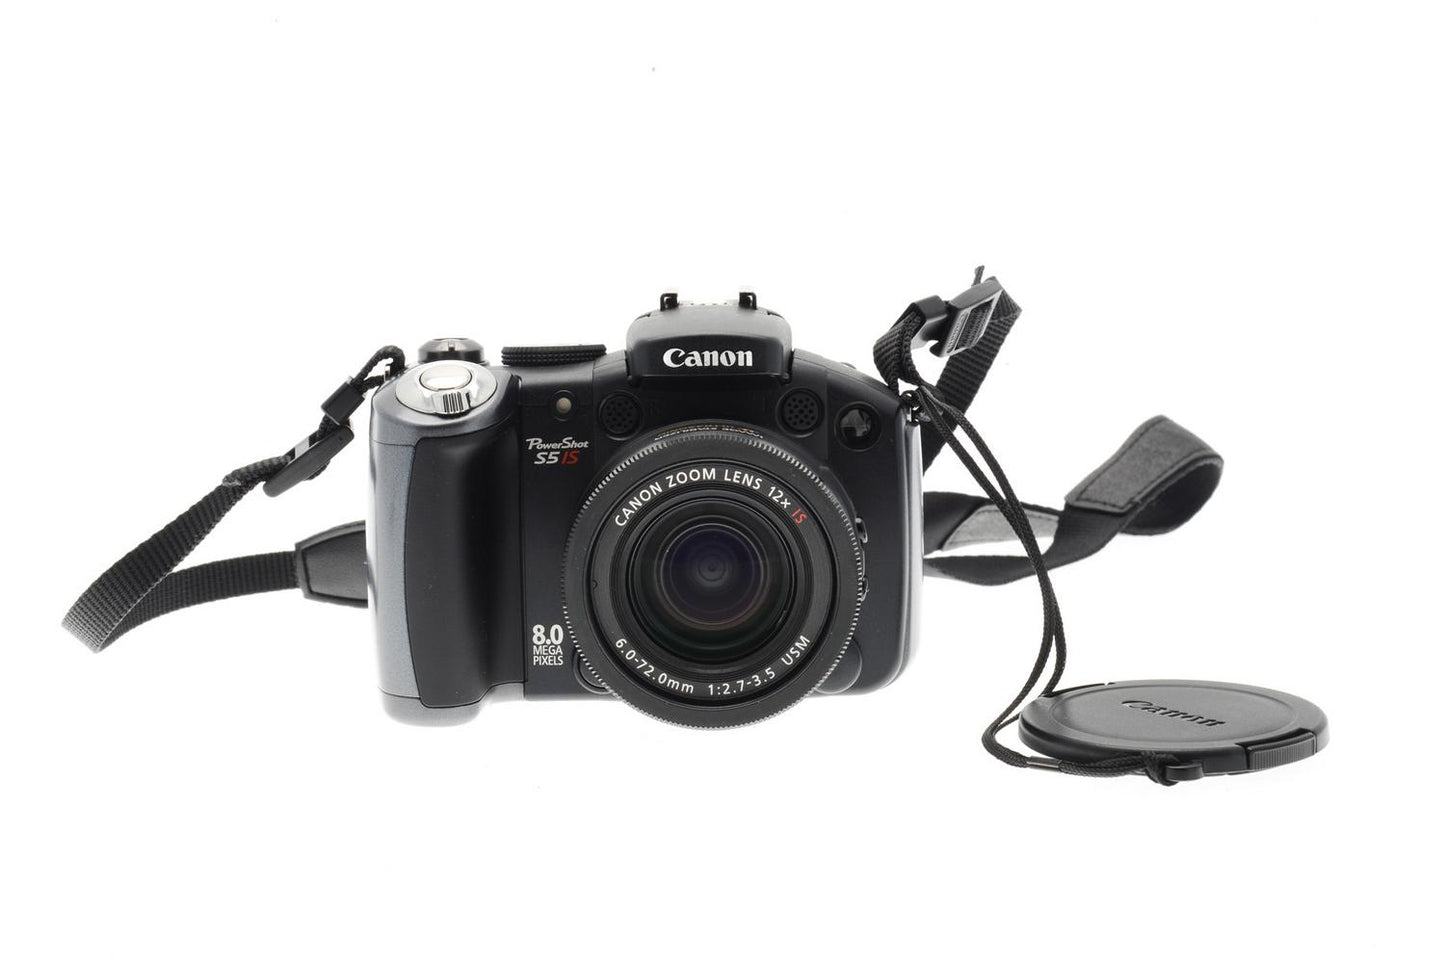 Canon PowerShot S5 IS - Camera